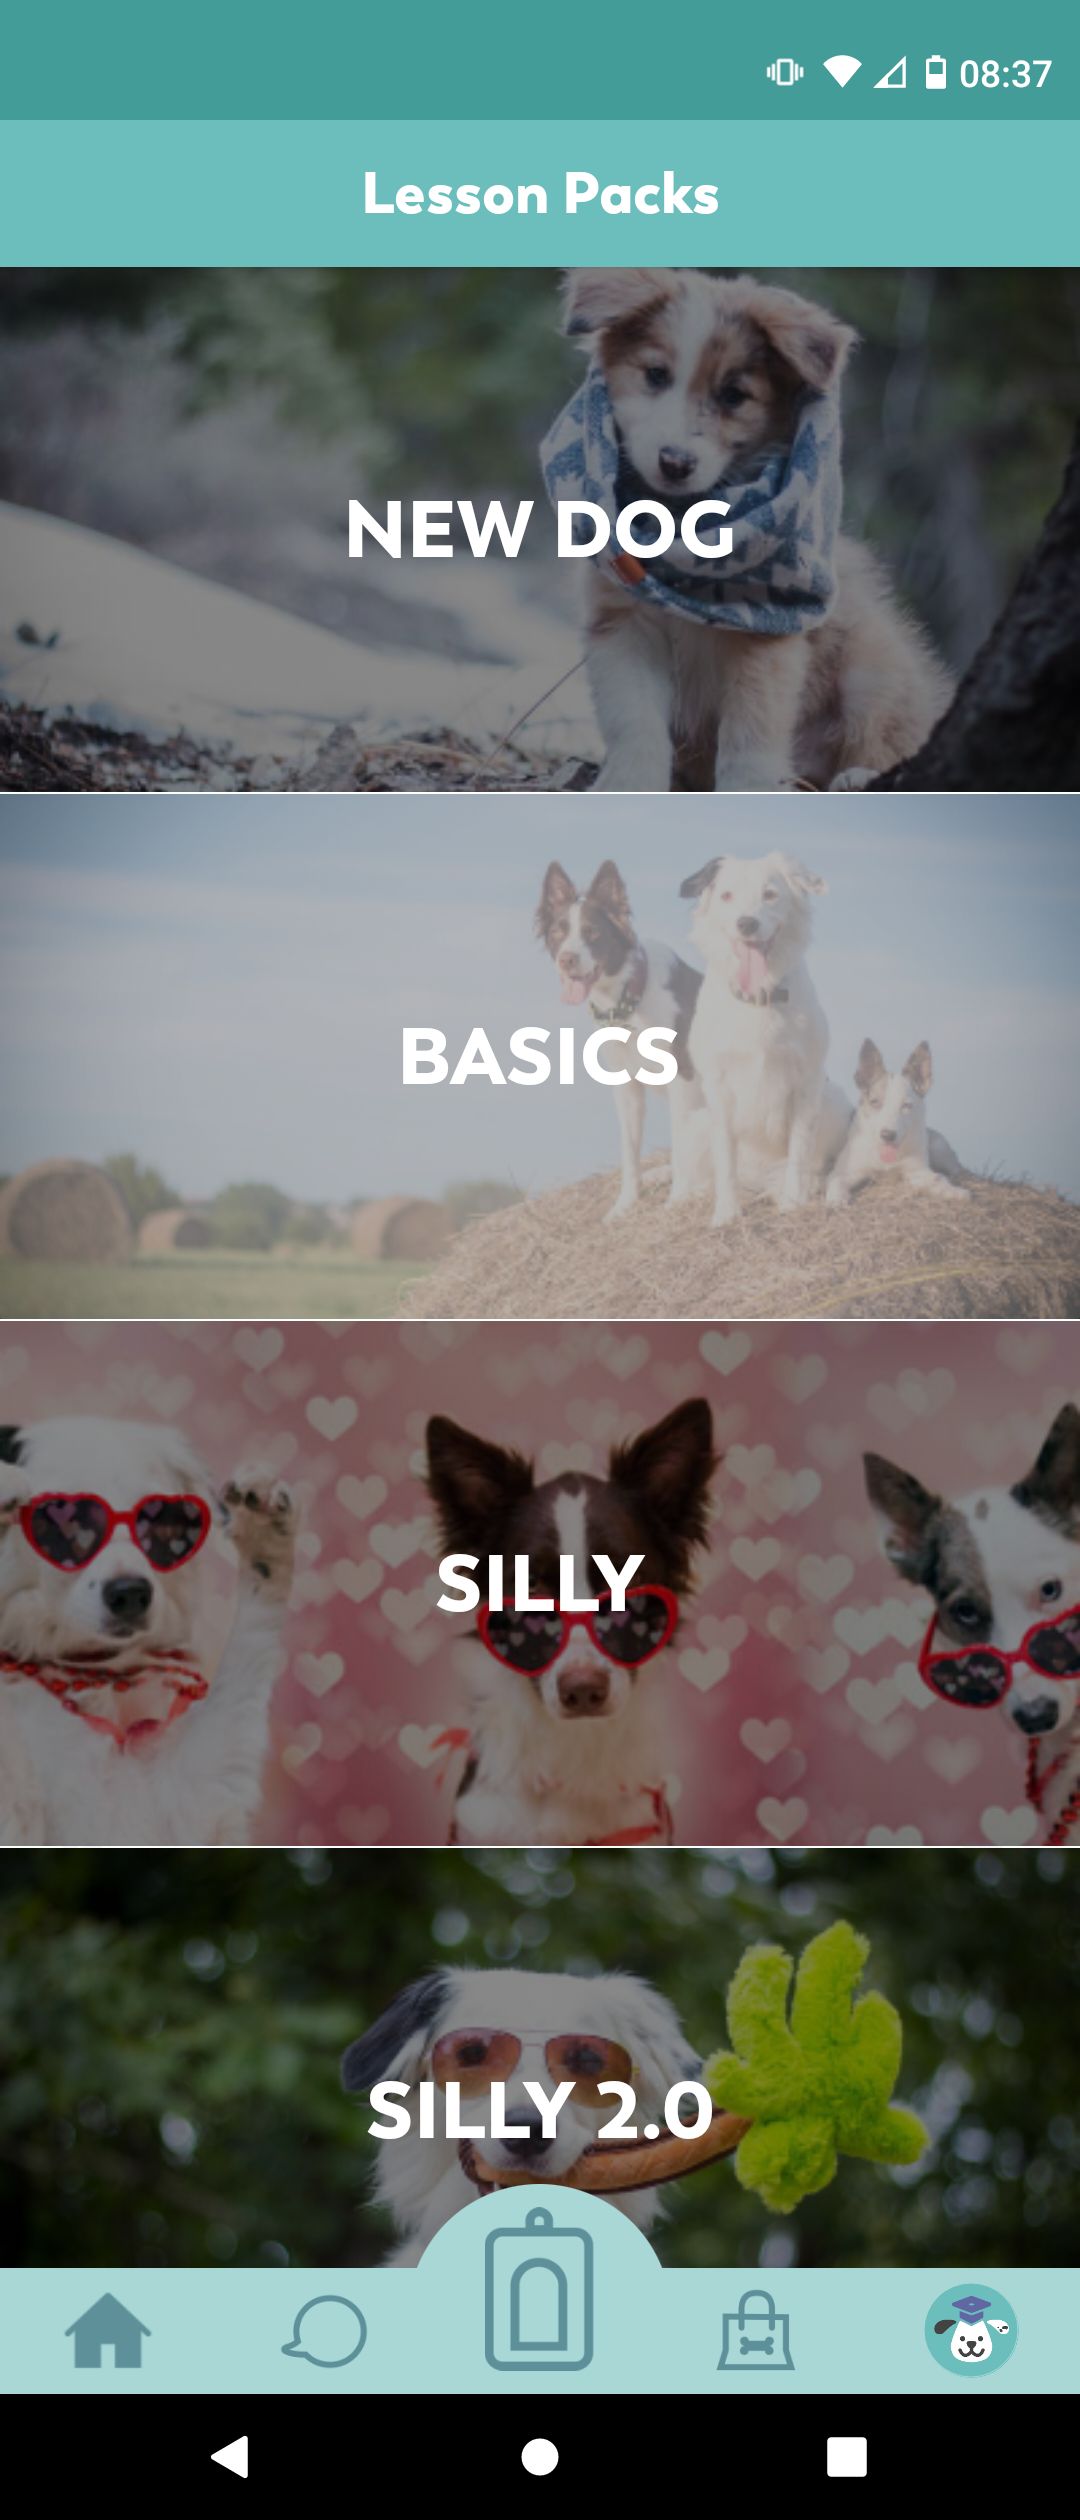 Lesson Packs on the Puppr Dog Training App